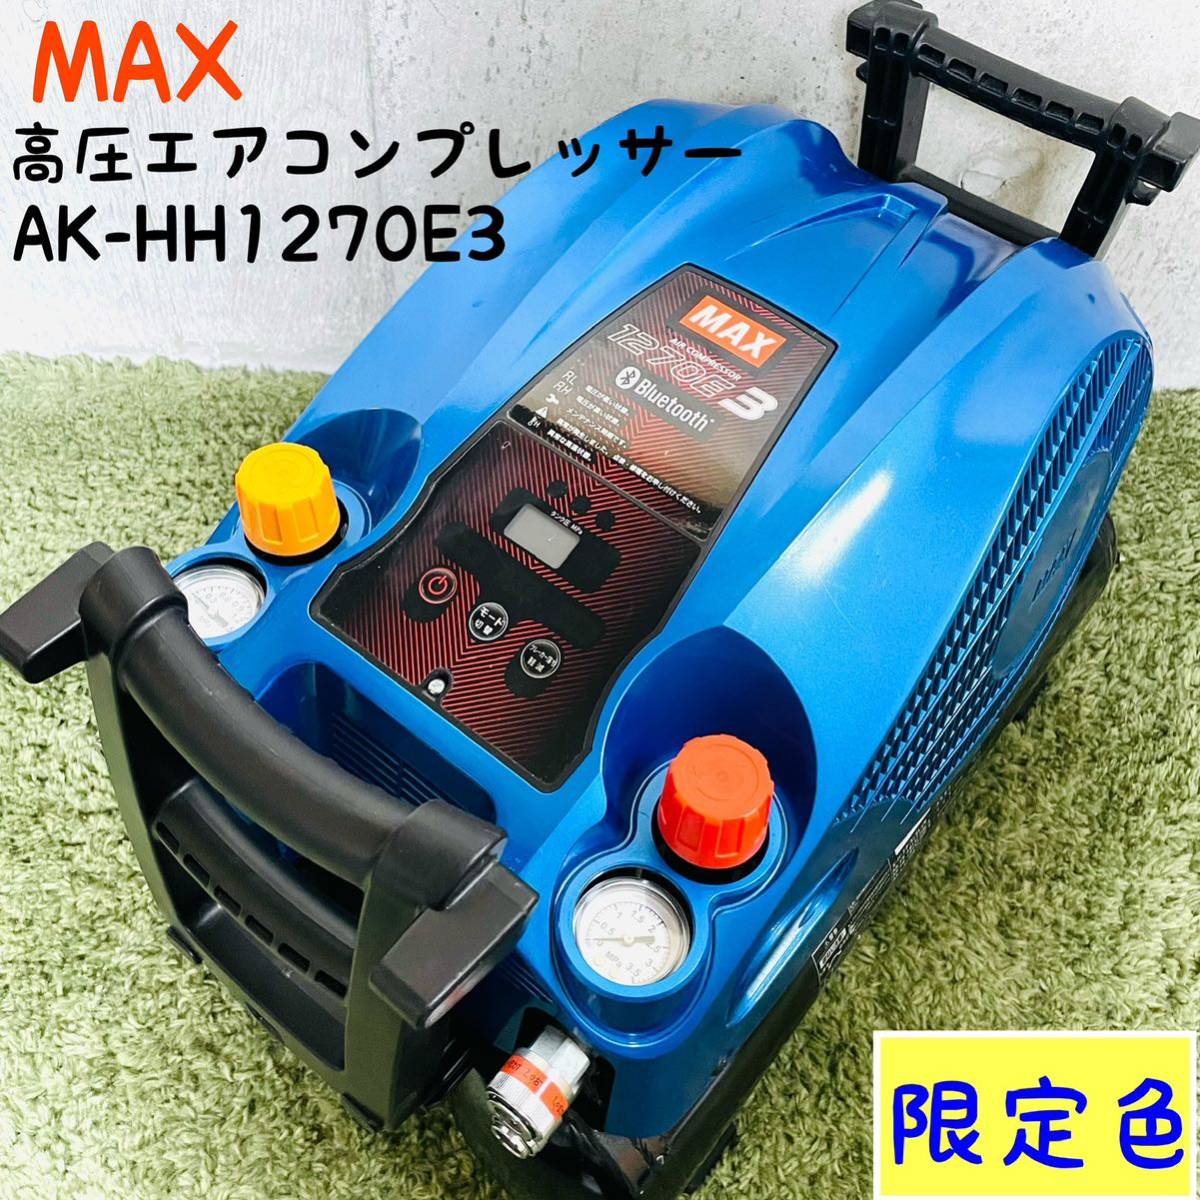 MAX AK-HL1270E3 [ブラック] オークション比較 - 価格.com